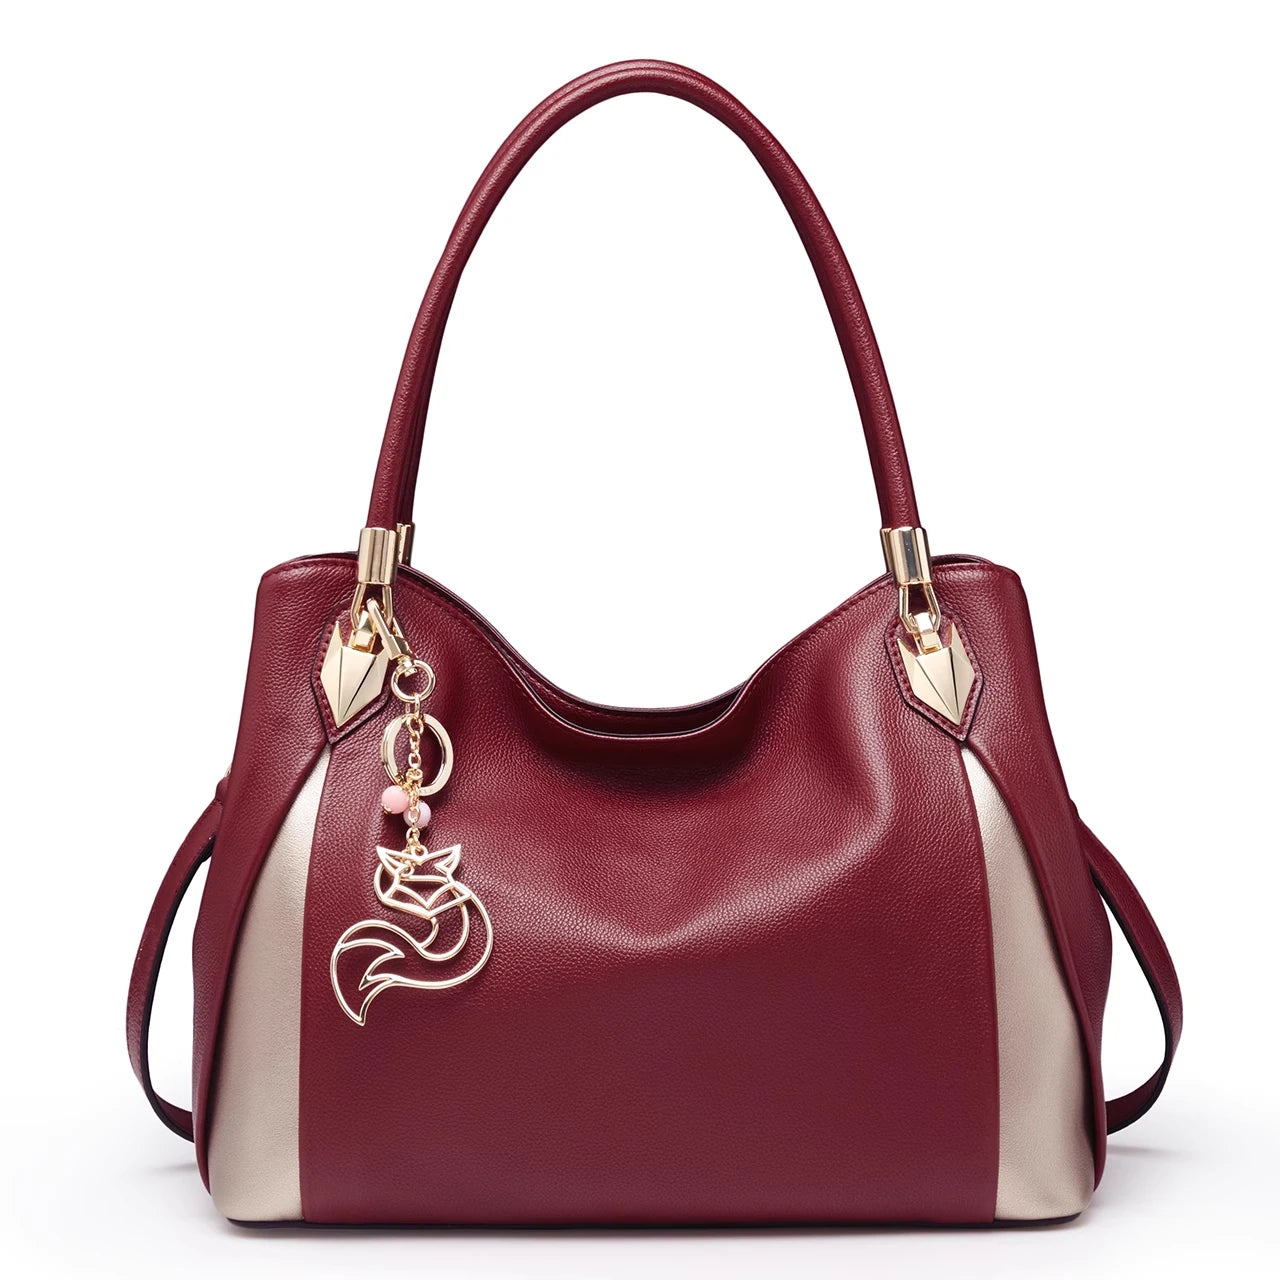 FOXER Women's Cowhide Handbag Female Genuine Leather Red